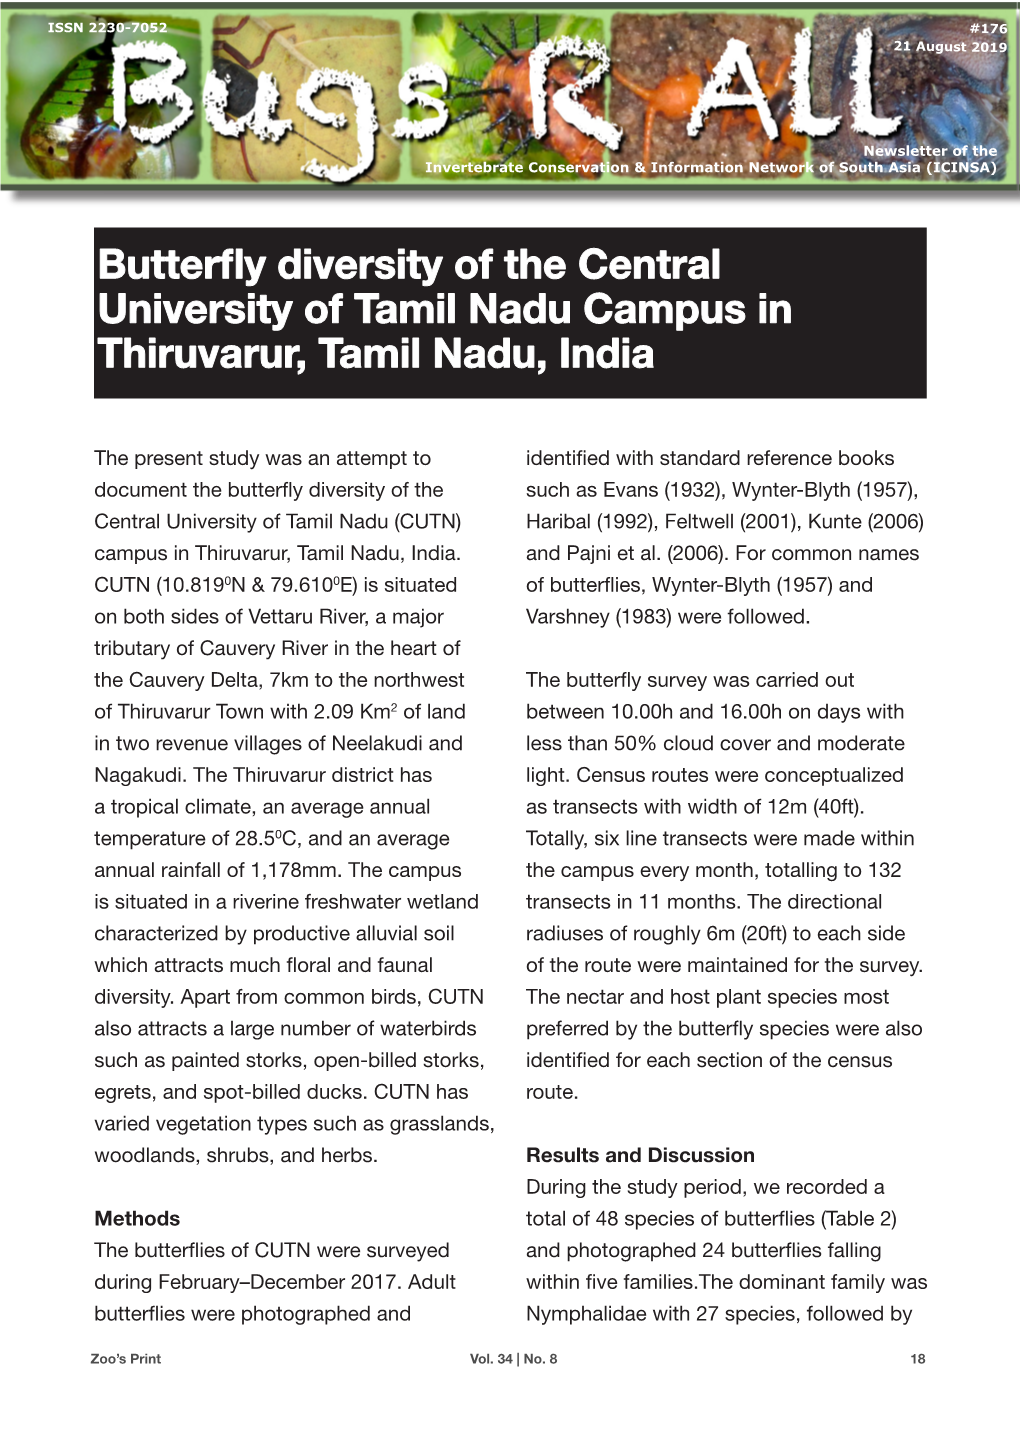 Butterfly Diversity of the Central University of Tamil Nadu Campus in Thiruvarur, Tamil Nadu, India